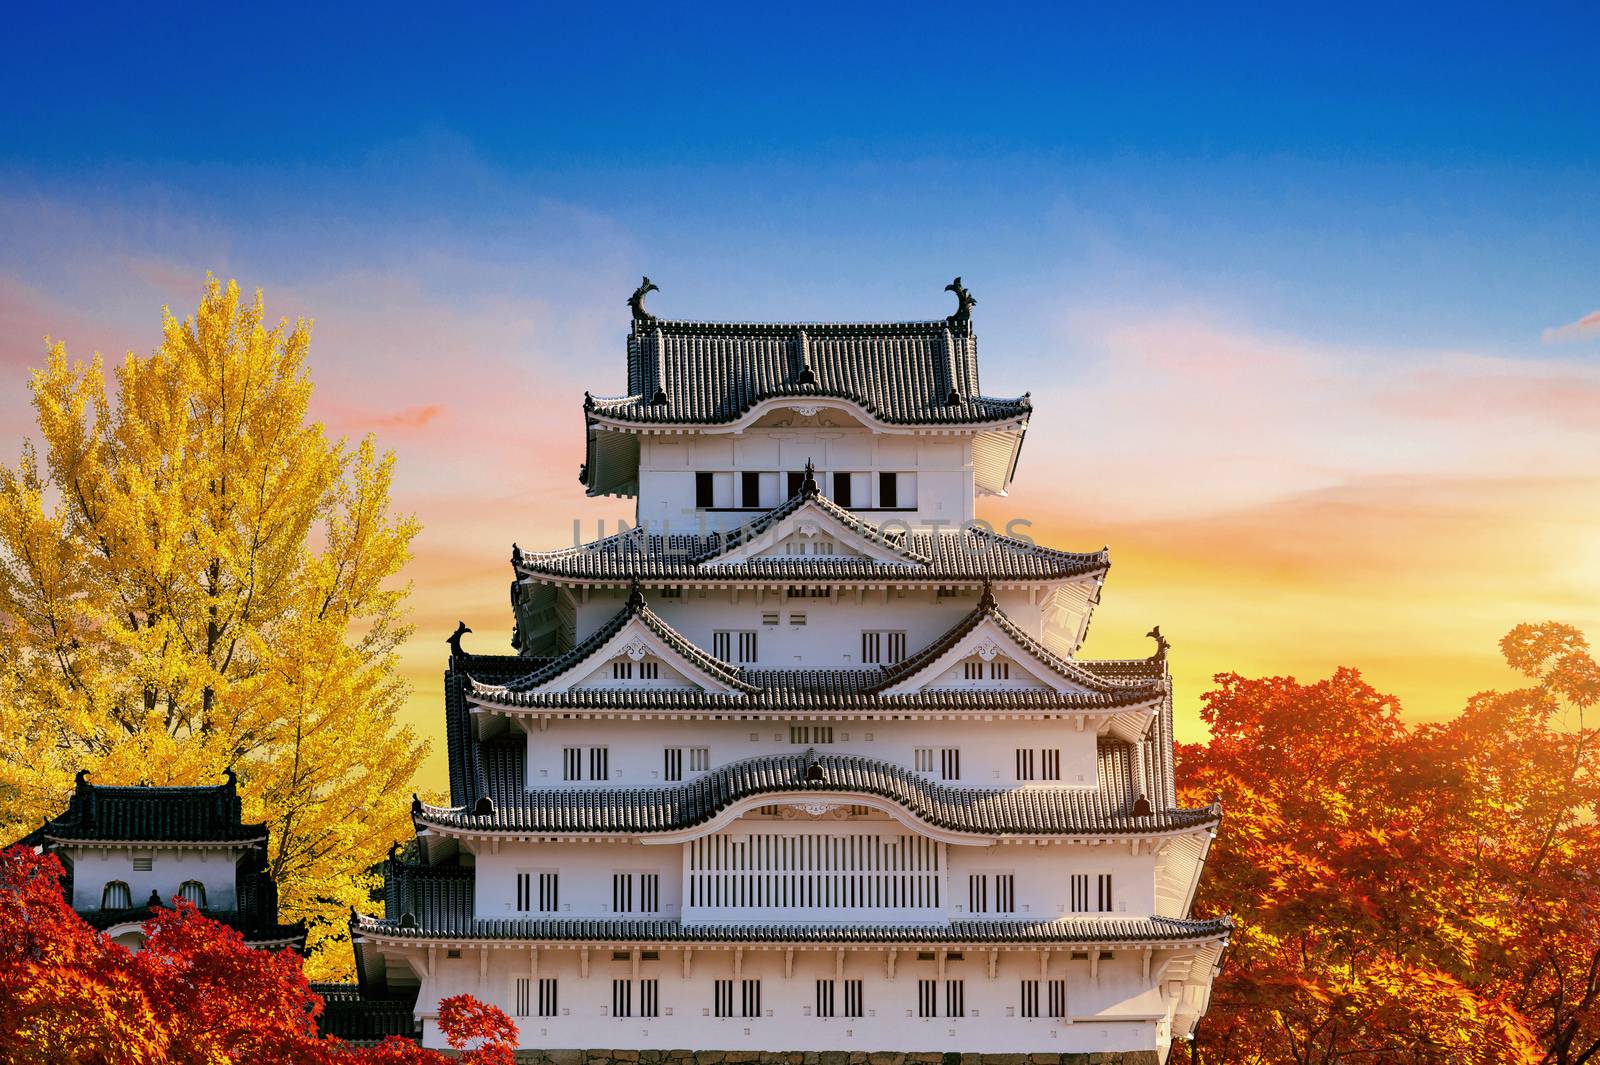 Autumn Season and castle in Himeji, Japan